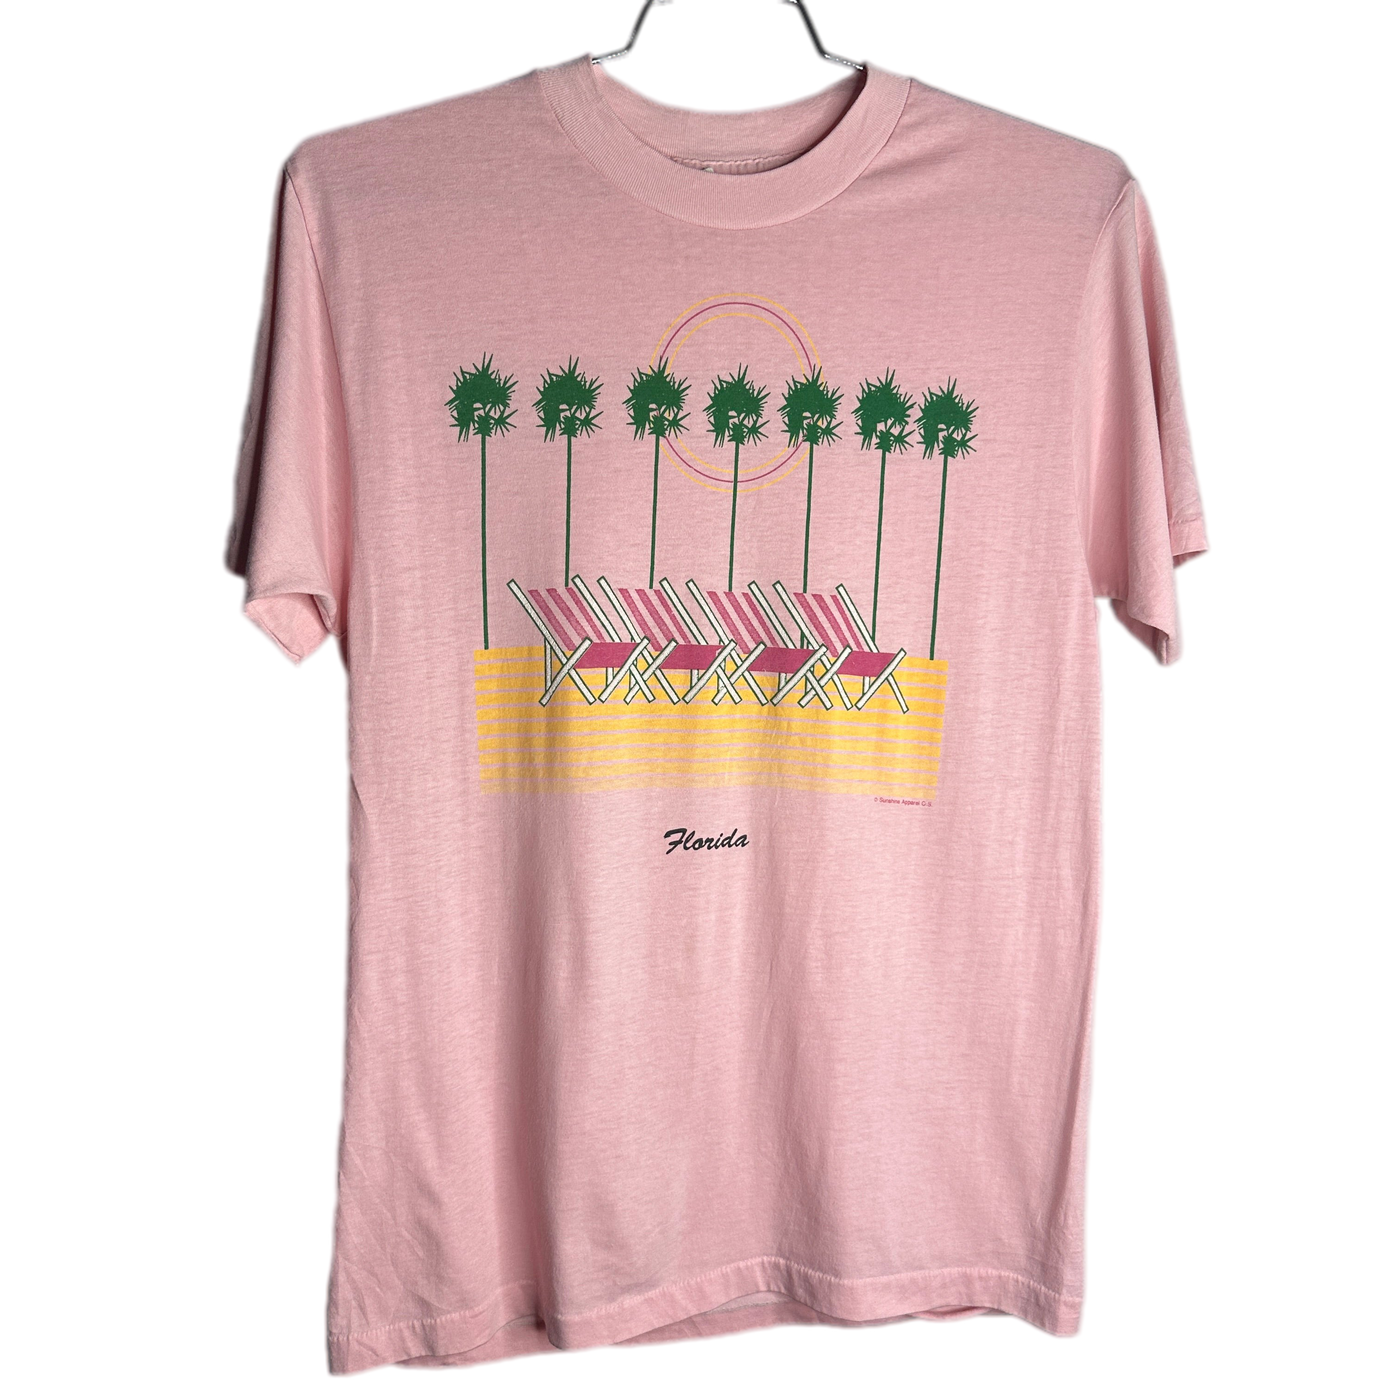 90's Florida Palm Tree Graphic T-shirt sz XL